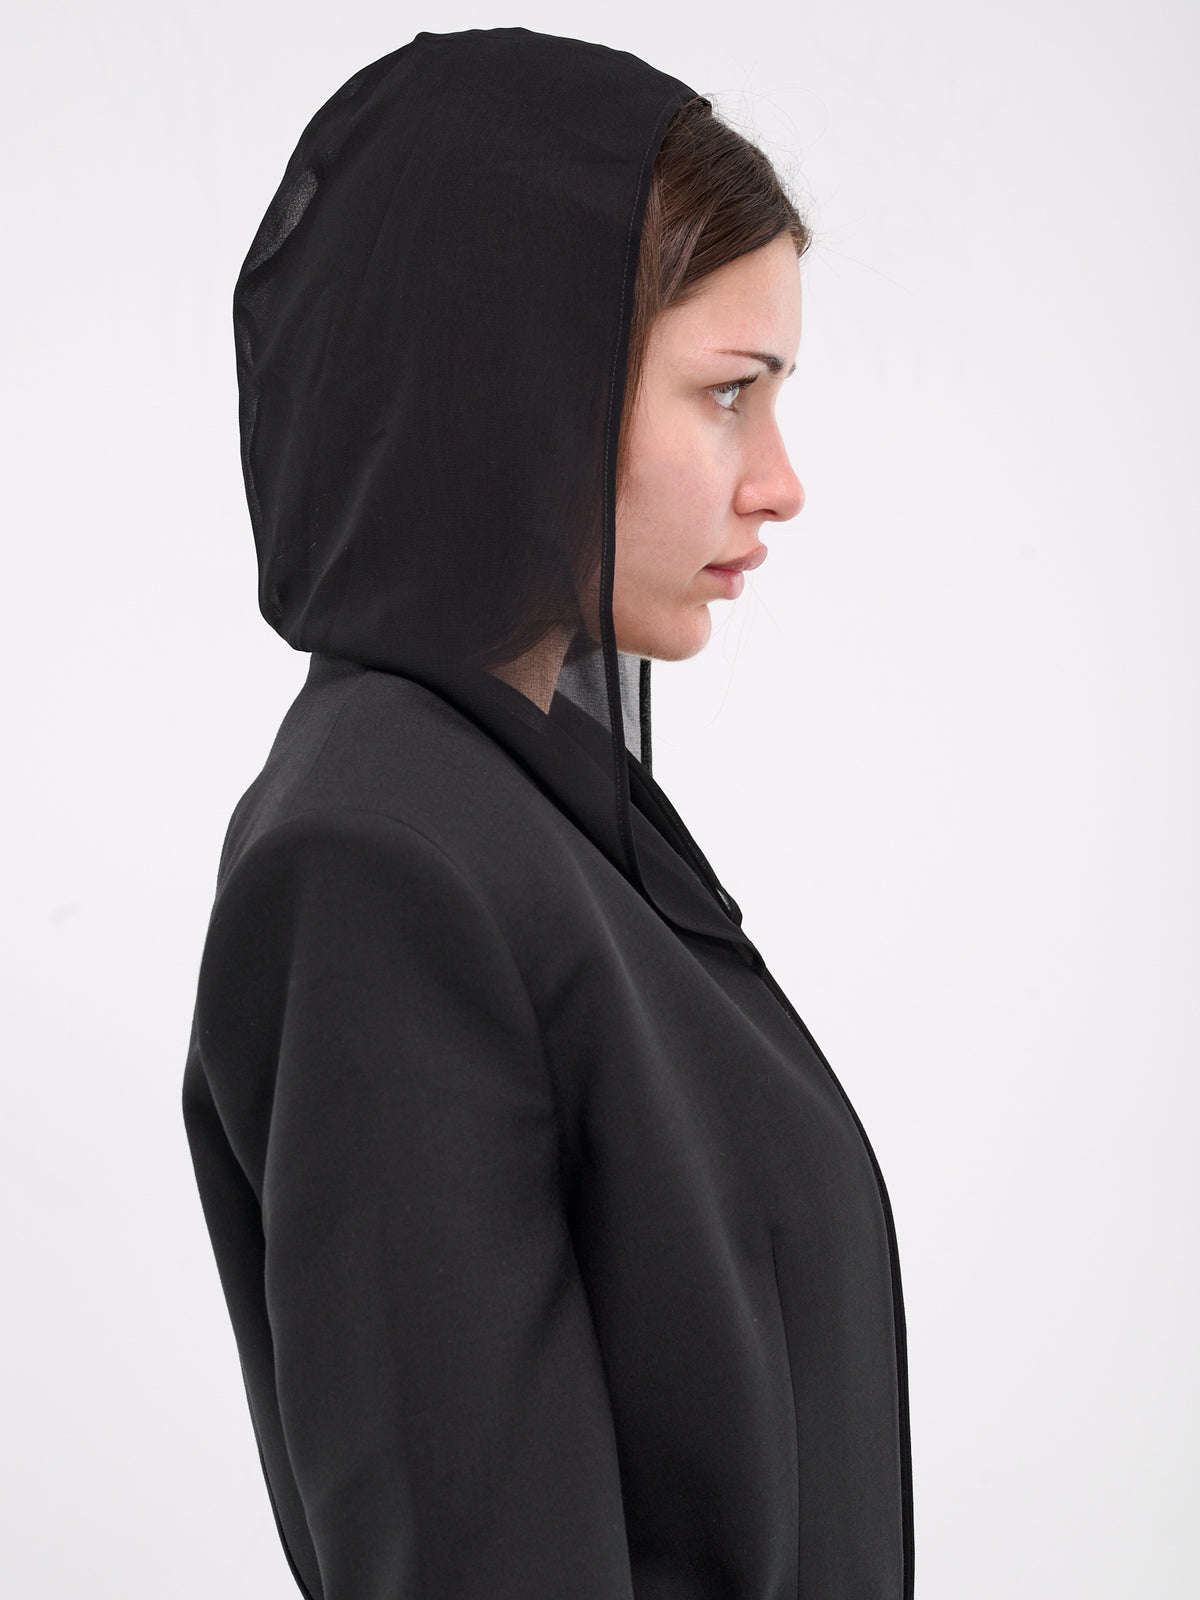 Tailored Blazer & Sheer Headscarf (JKT022-BLACK)